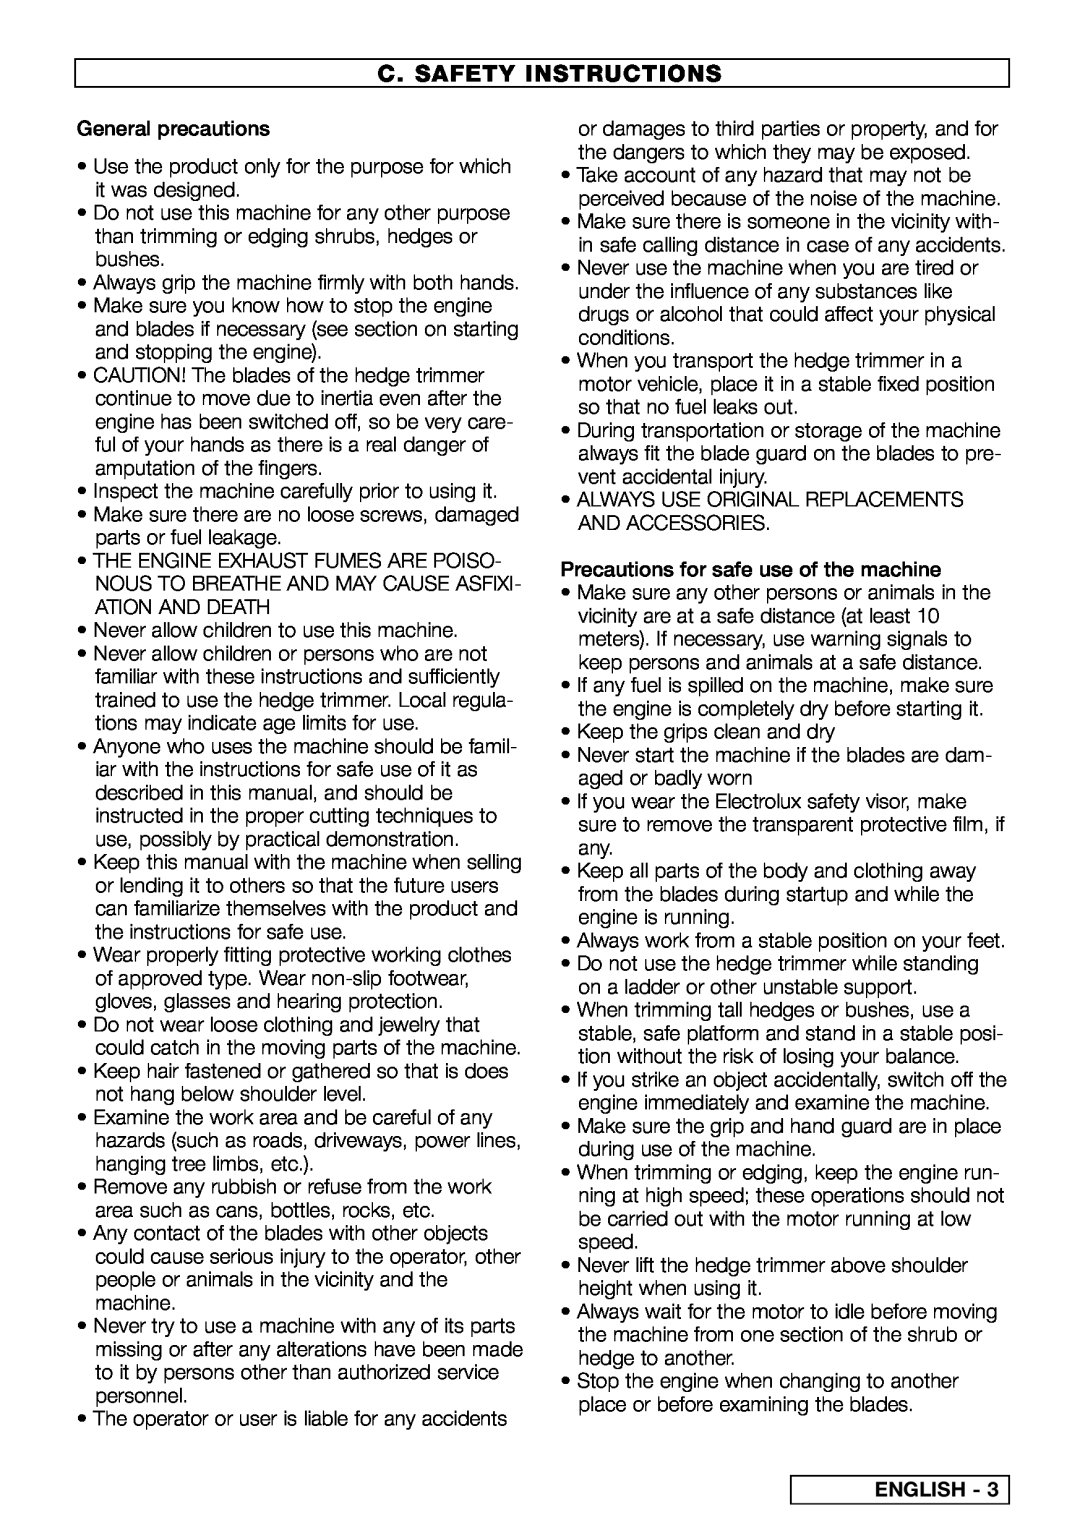 Husqvarna PN 249512 instruction manual C. Safety Instructions, English 